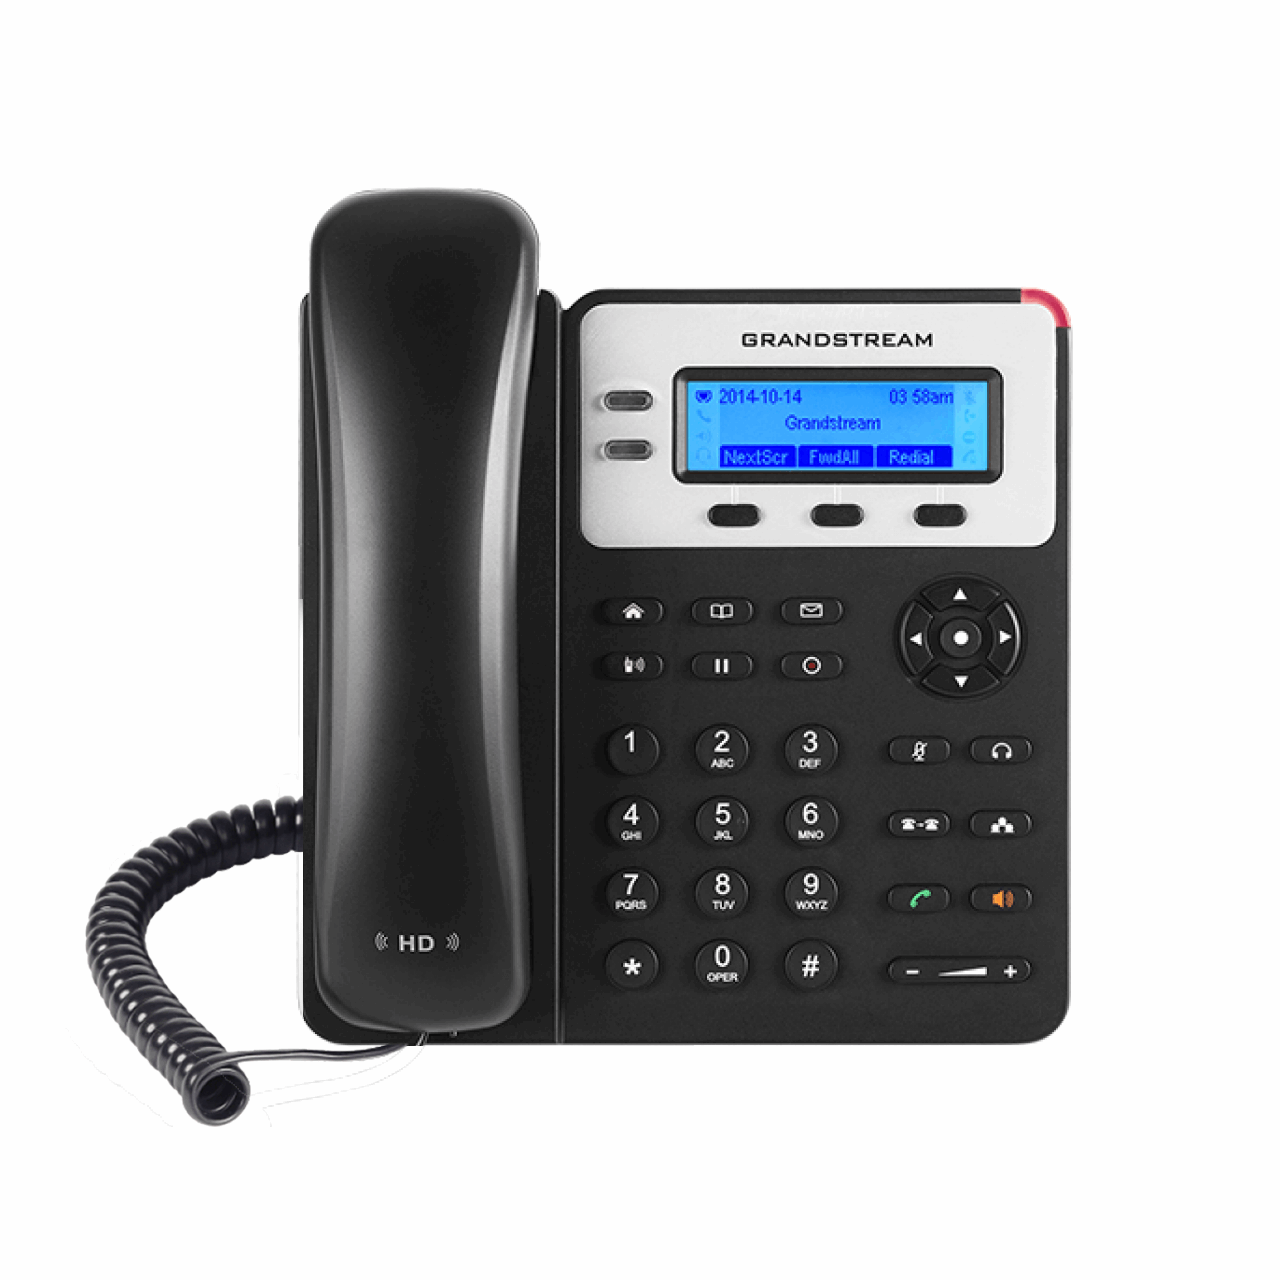  Phone Grandstream GXP 1625 ا تلفن تحت شبکه گرنداستریم GXP 1625